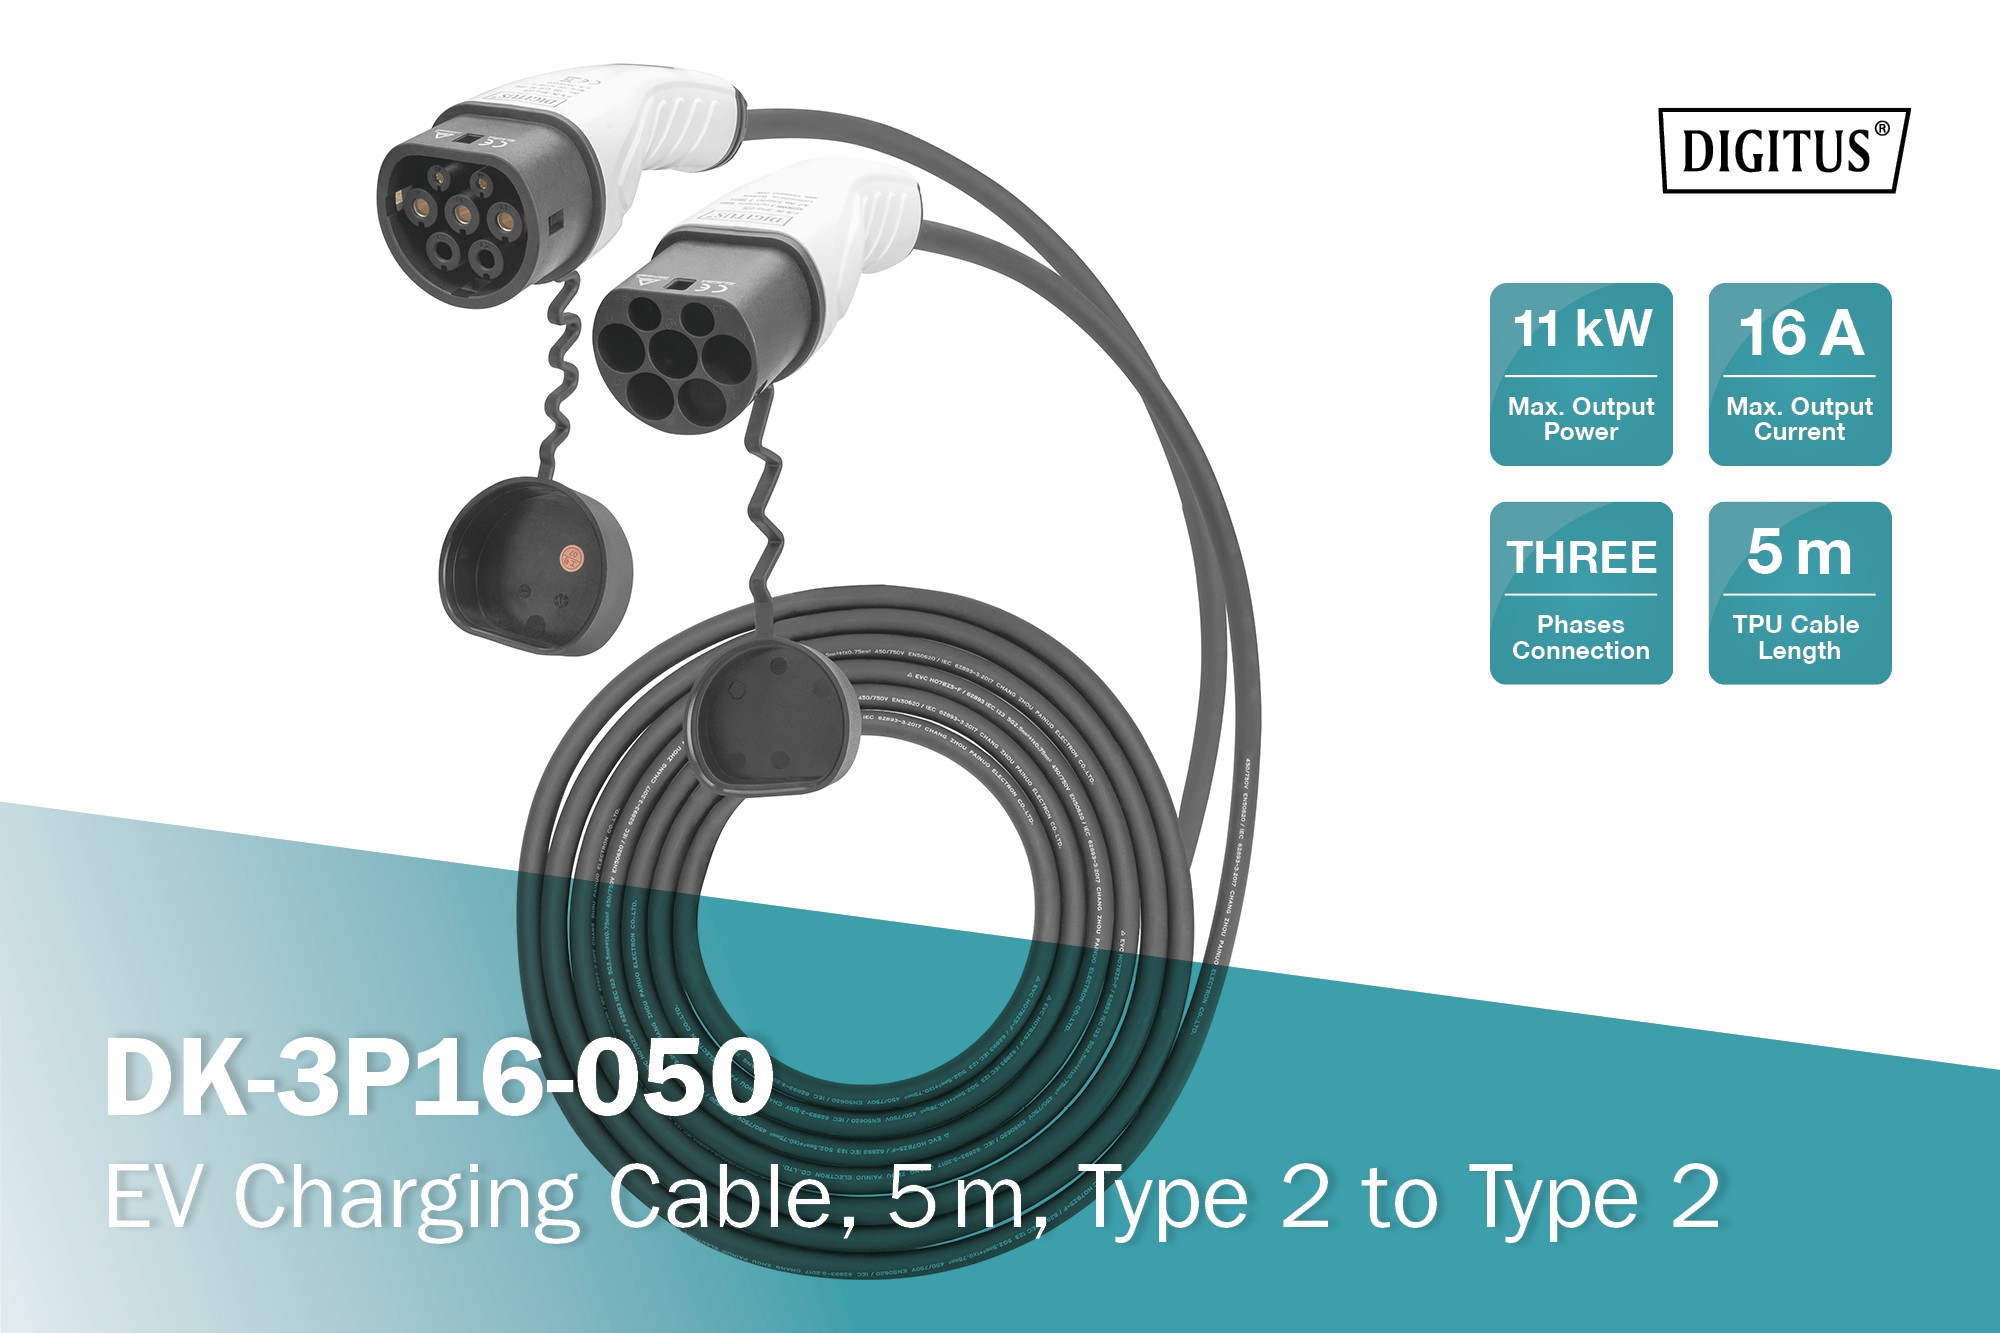 DK-3P16-050  Cable VE carga, Tipo 2 Mennekes 16A trifasica 11kW  5 metros Digitus